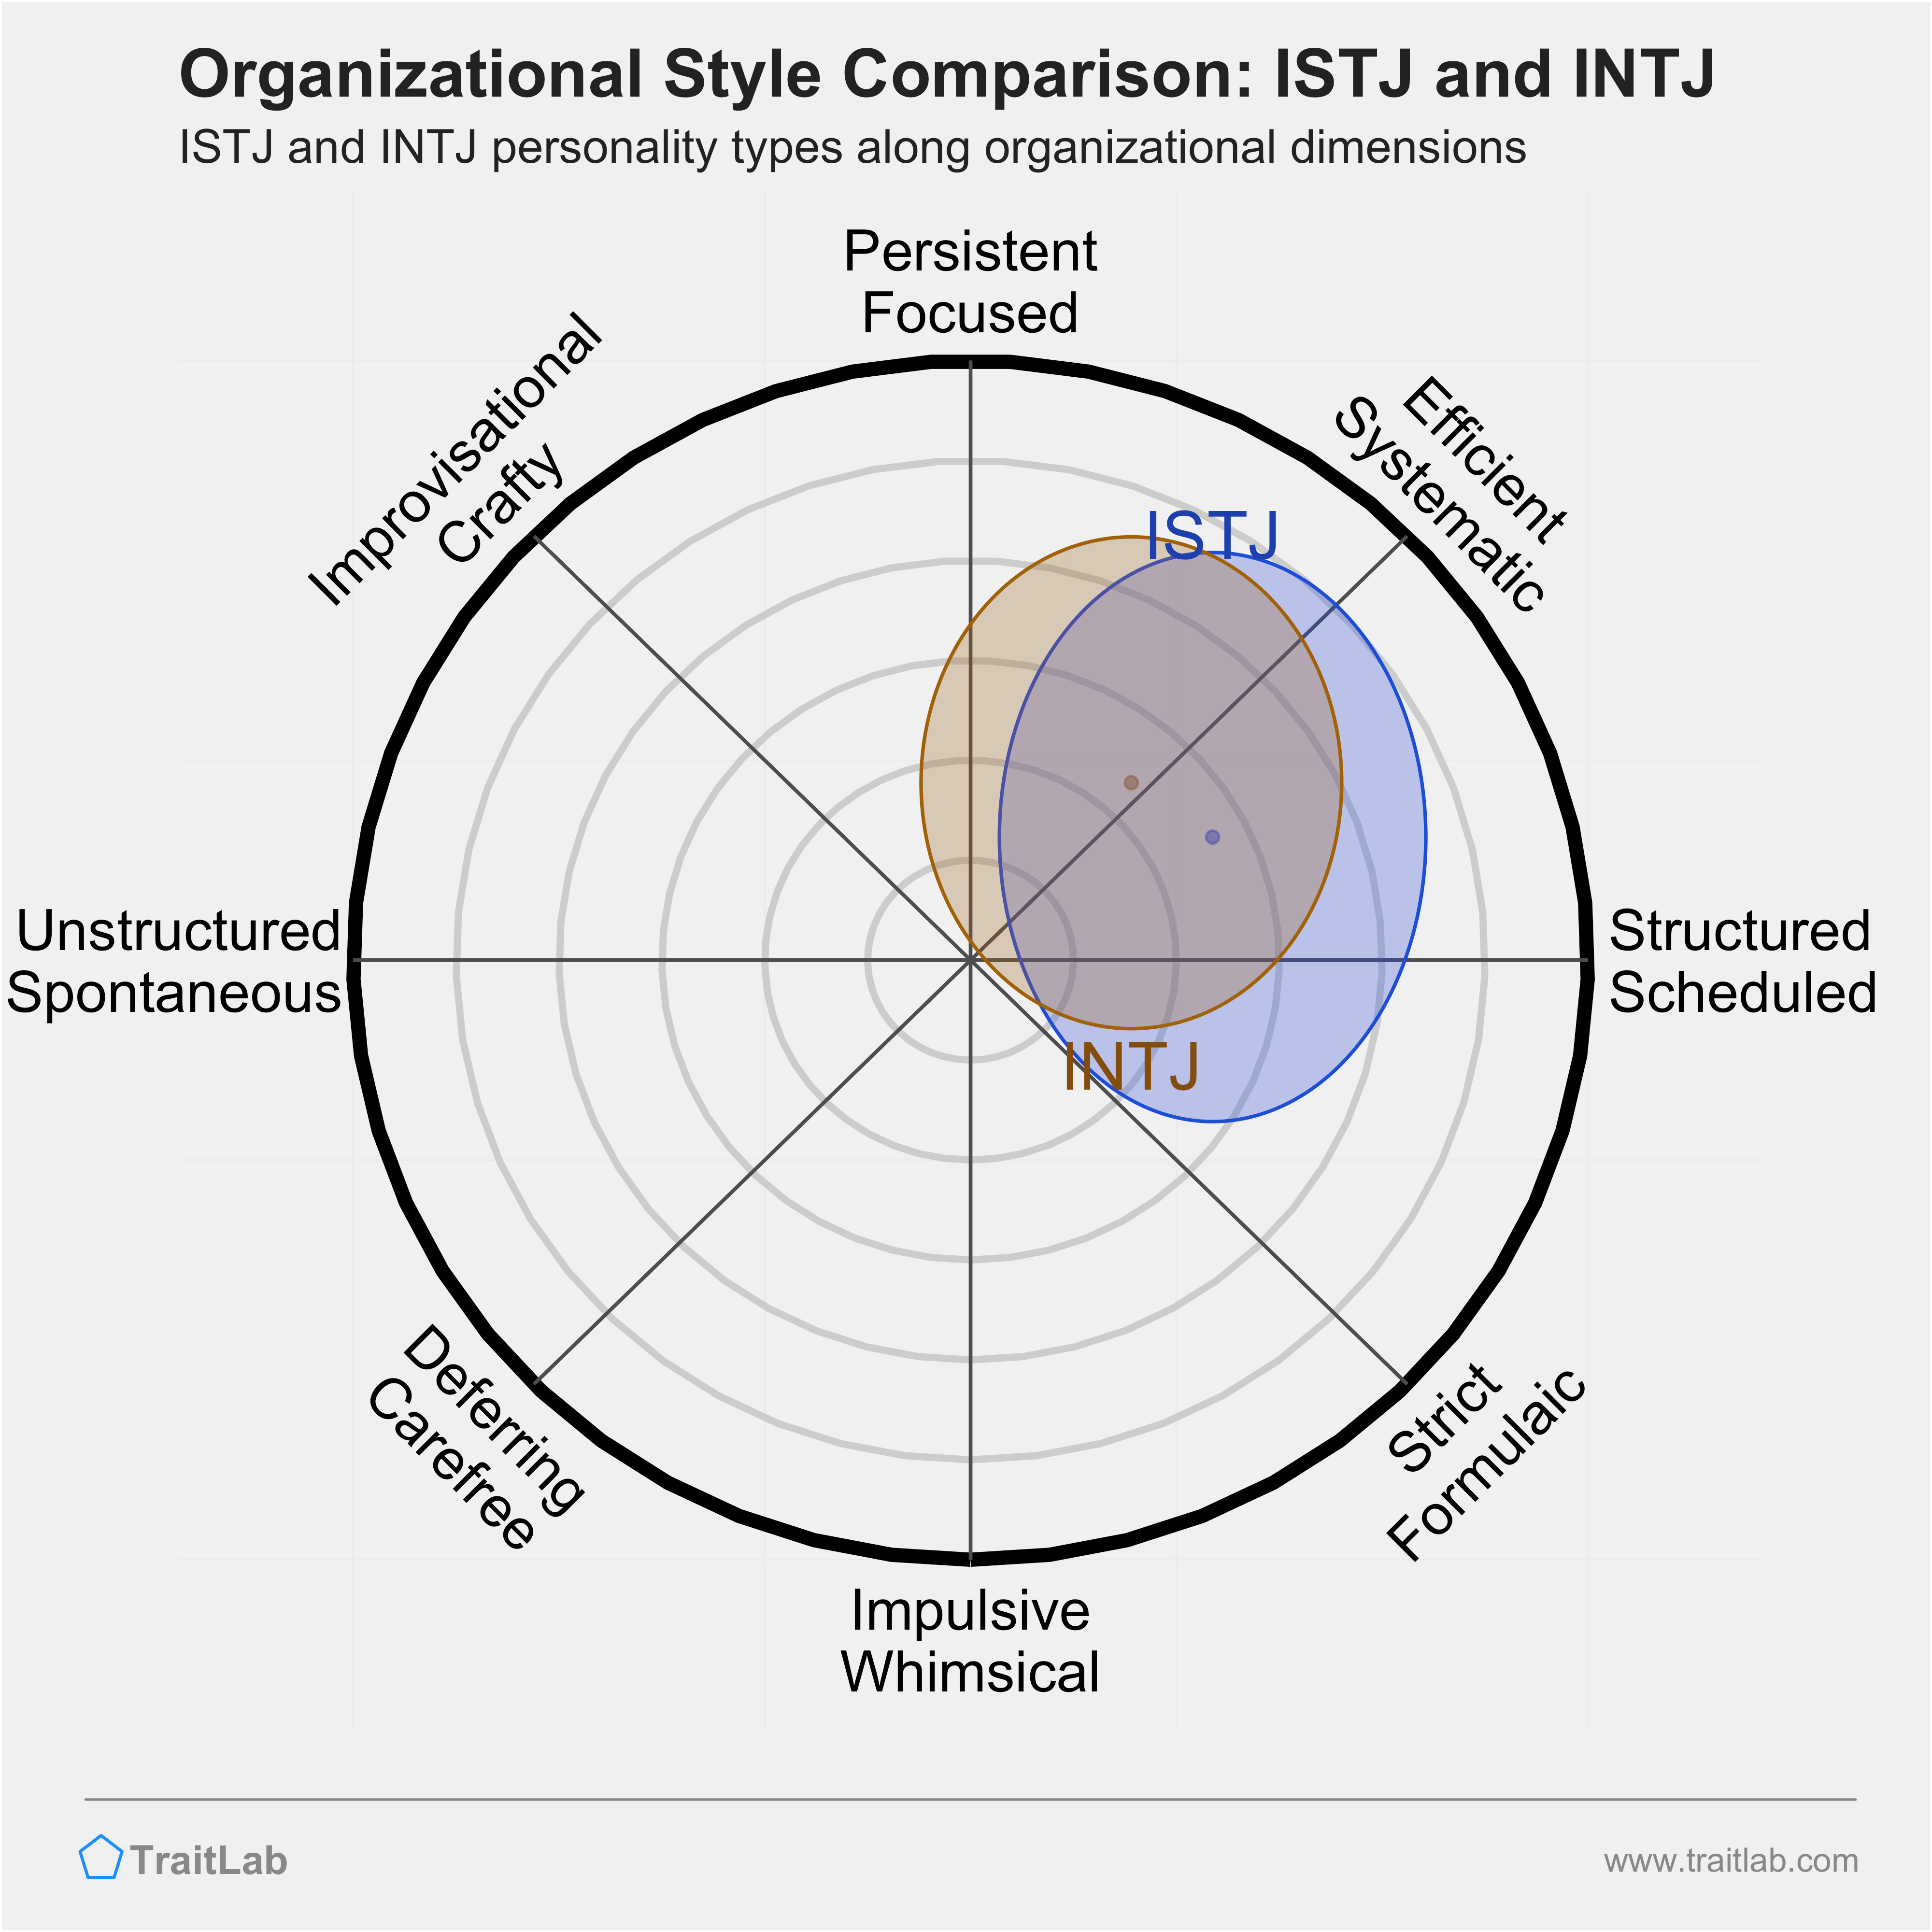 ISTJ and INTJ comparison across organizational dimensions